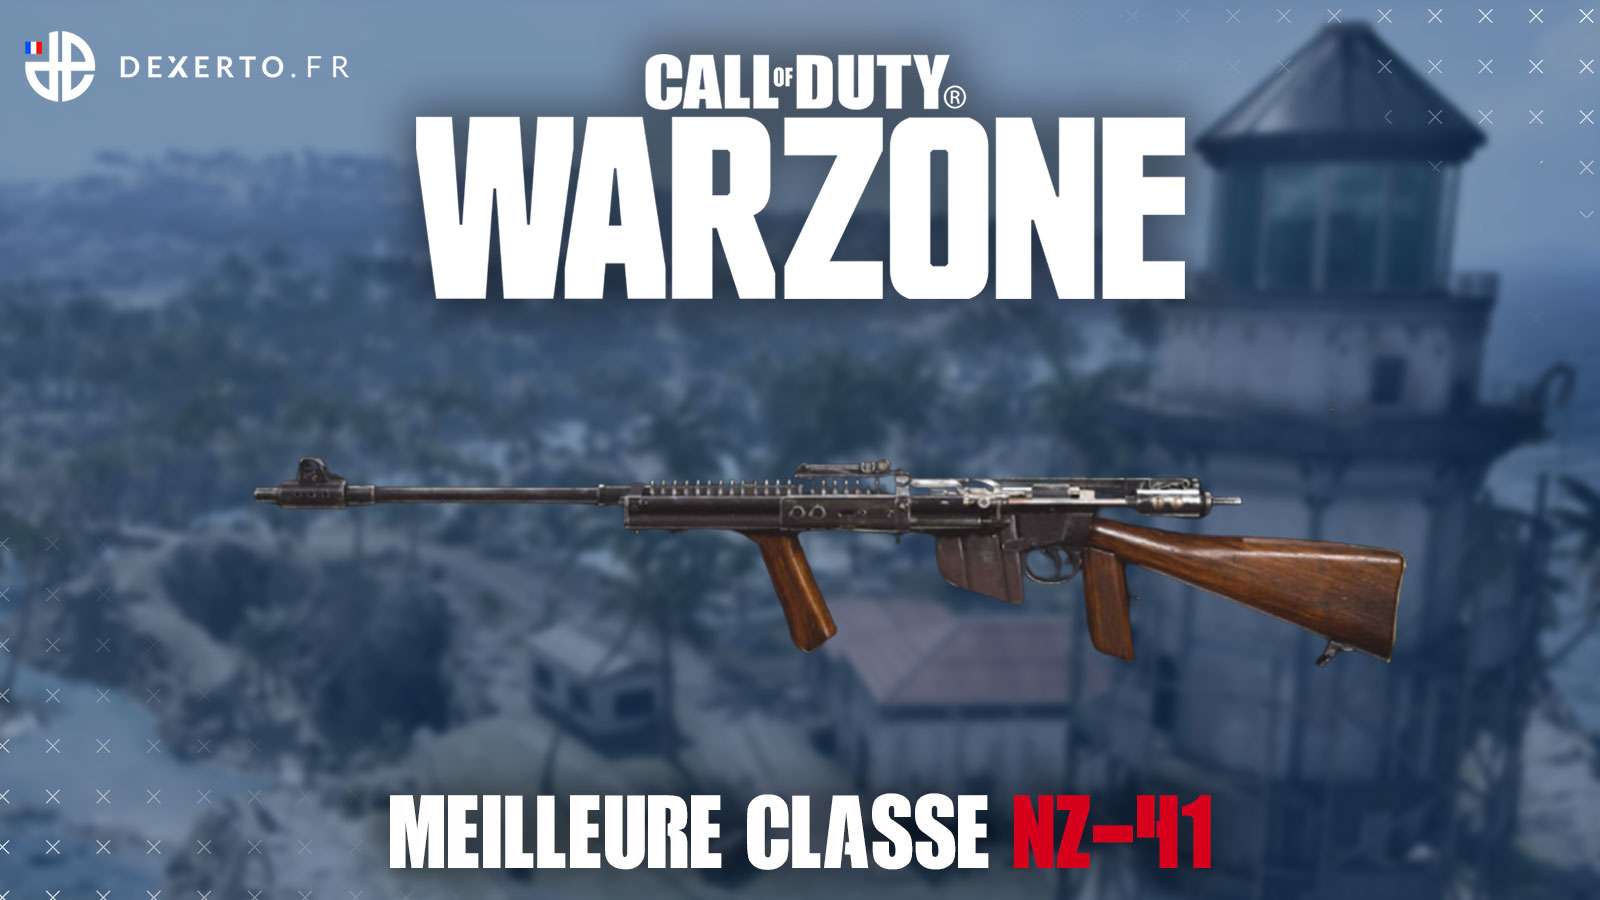 NZ-41 Warzone